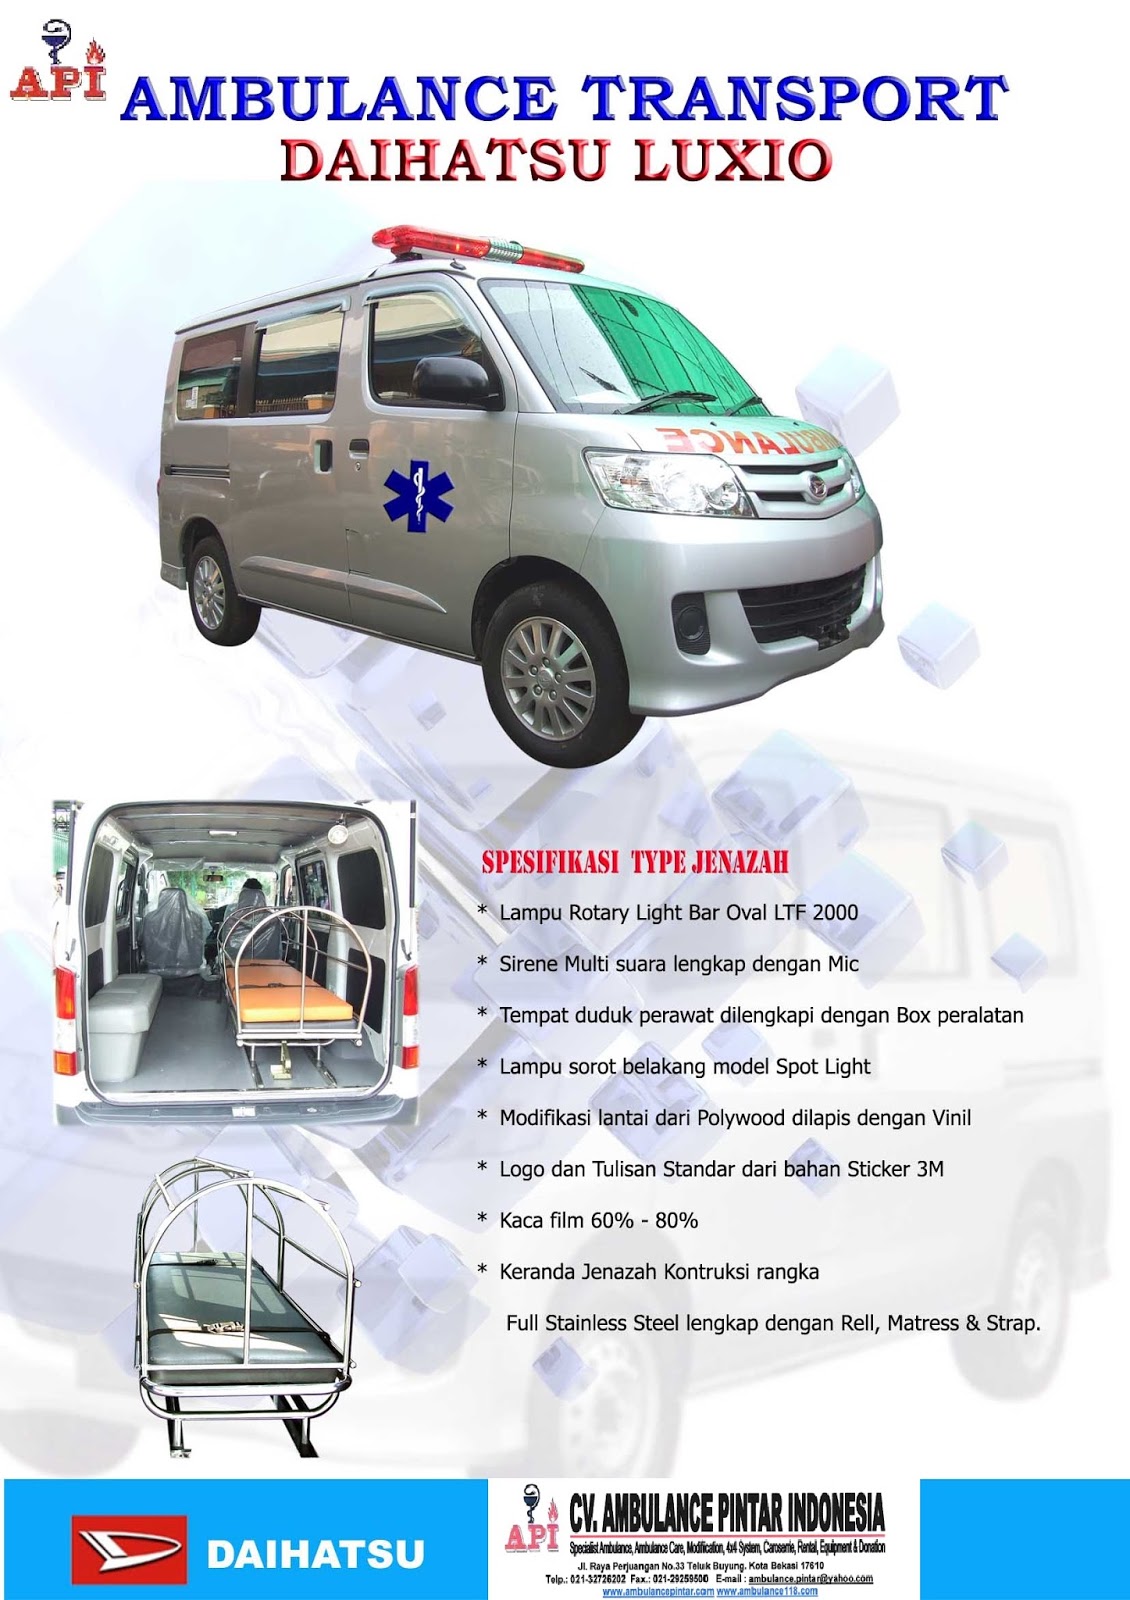 Ambulance Daihatsu Luxio MENJUAL DAN MENYEWAKAN MOBIL AMBULANCE